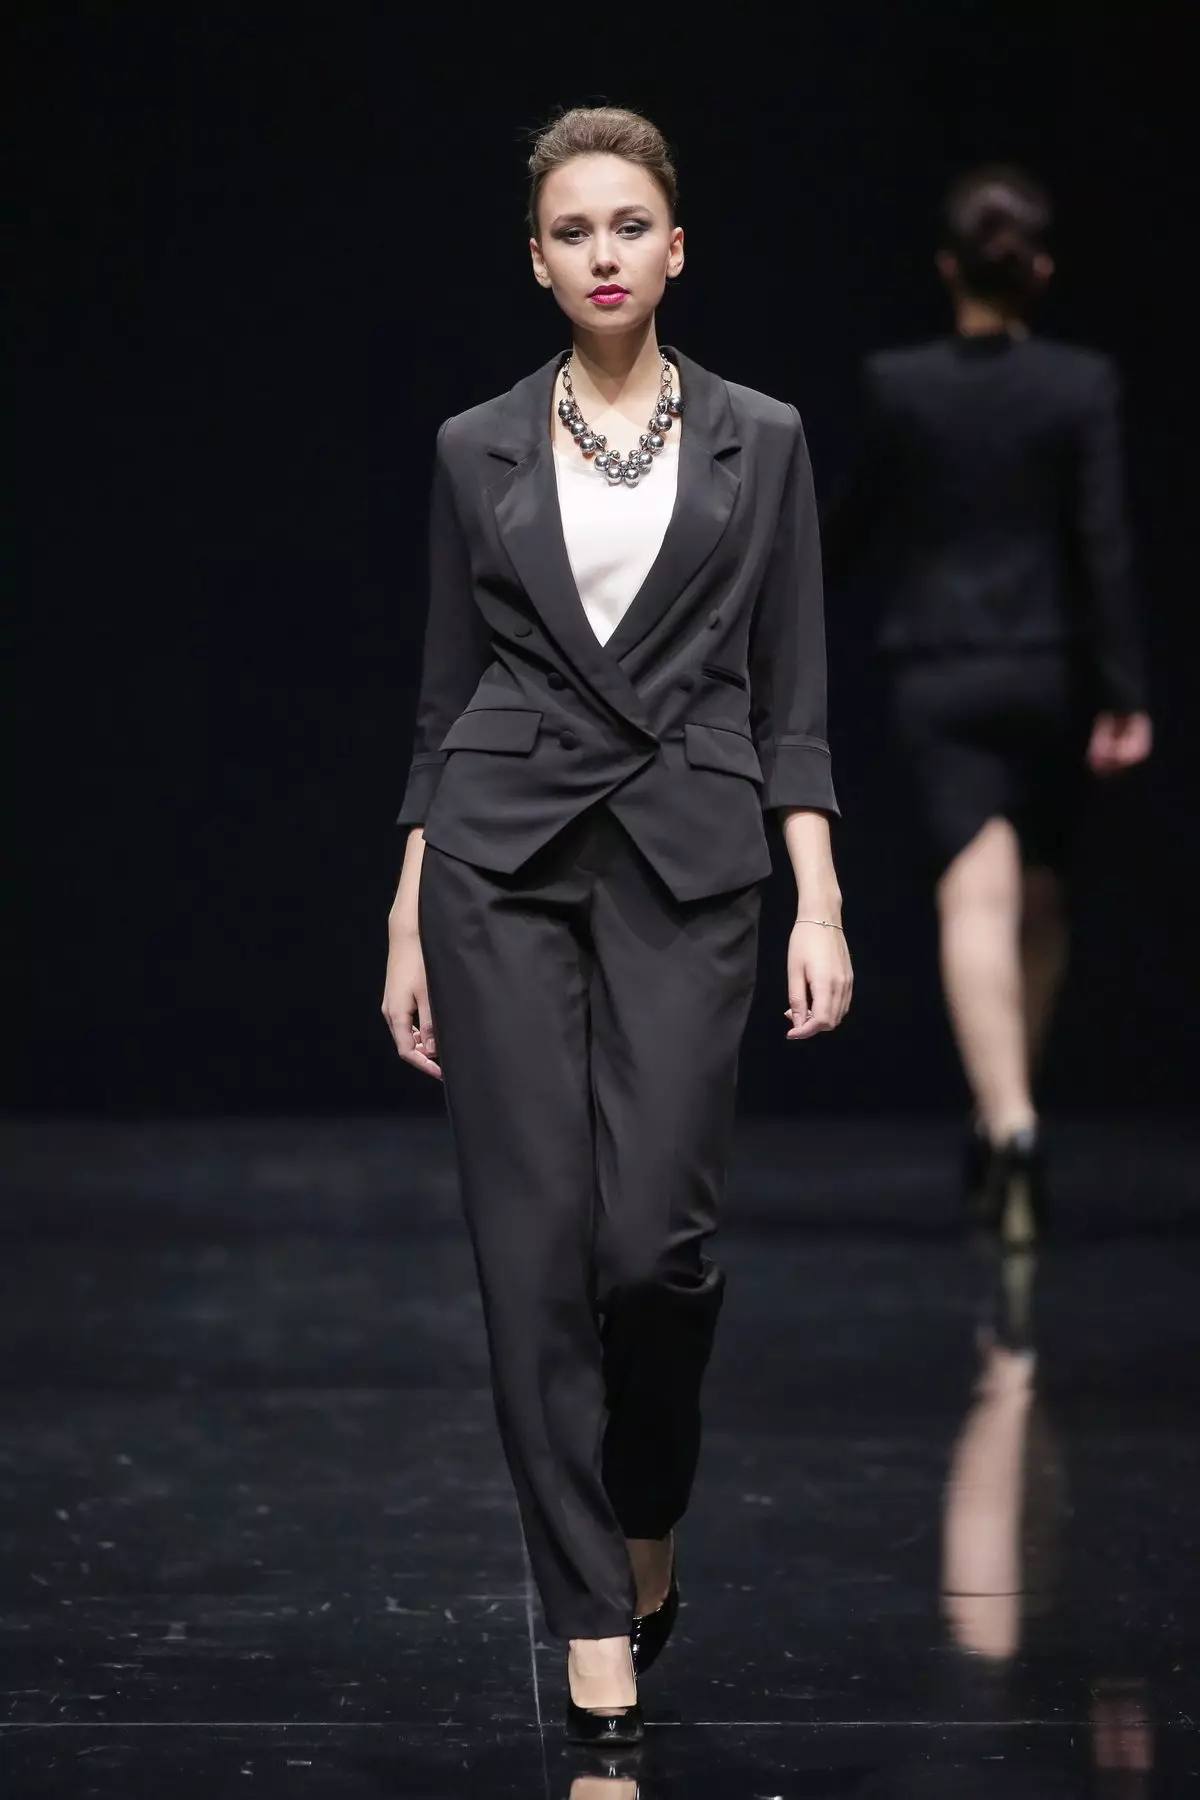 Trouser Կանացի զգեստներ 2021 (242 լուսանկար). Նոր եւ նորաձեւության միտումները, Chanel ոճը 14844_124